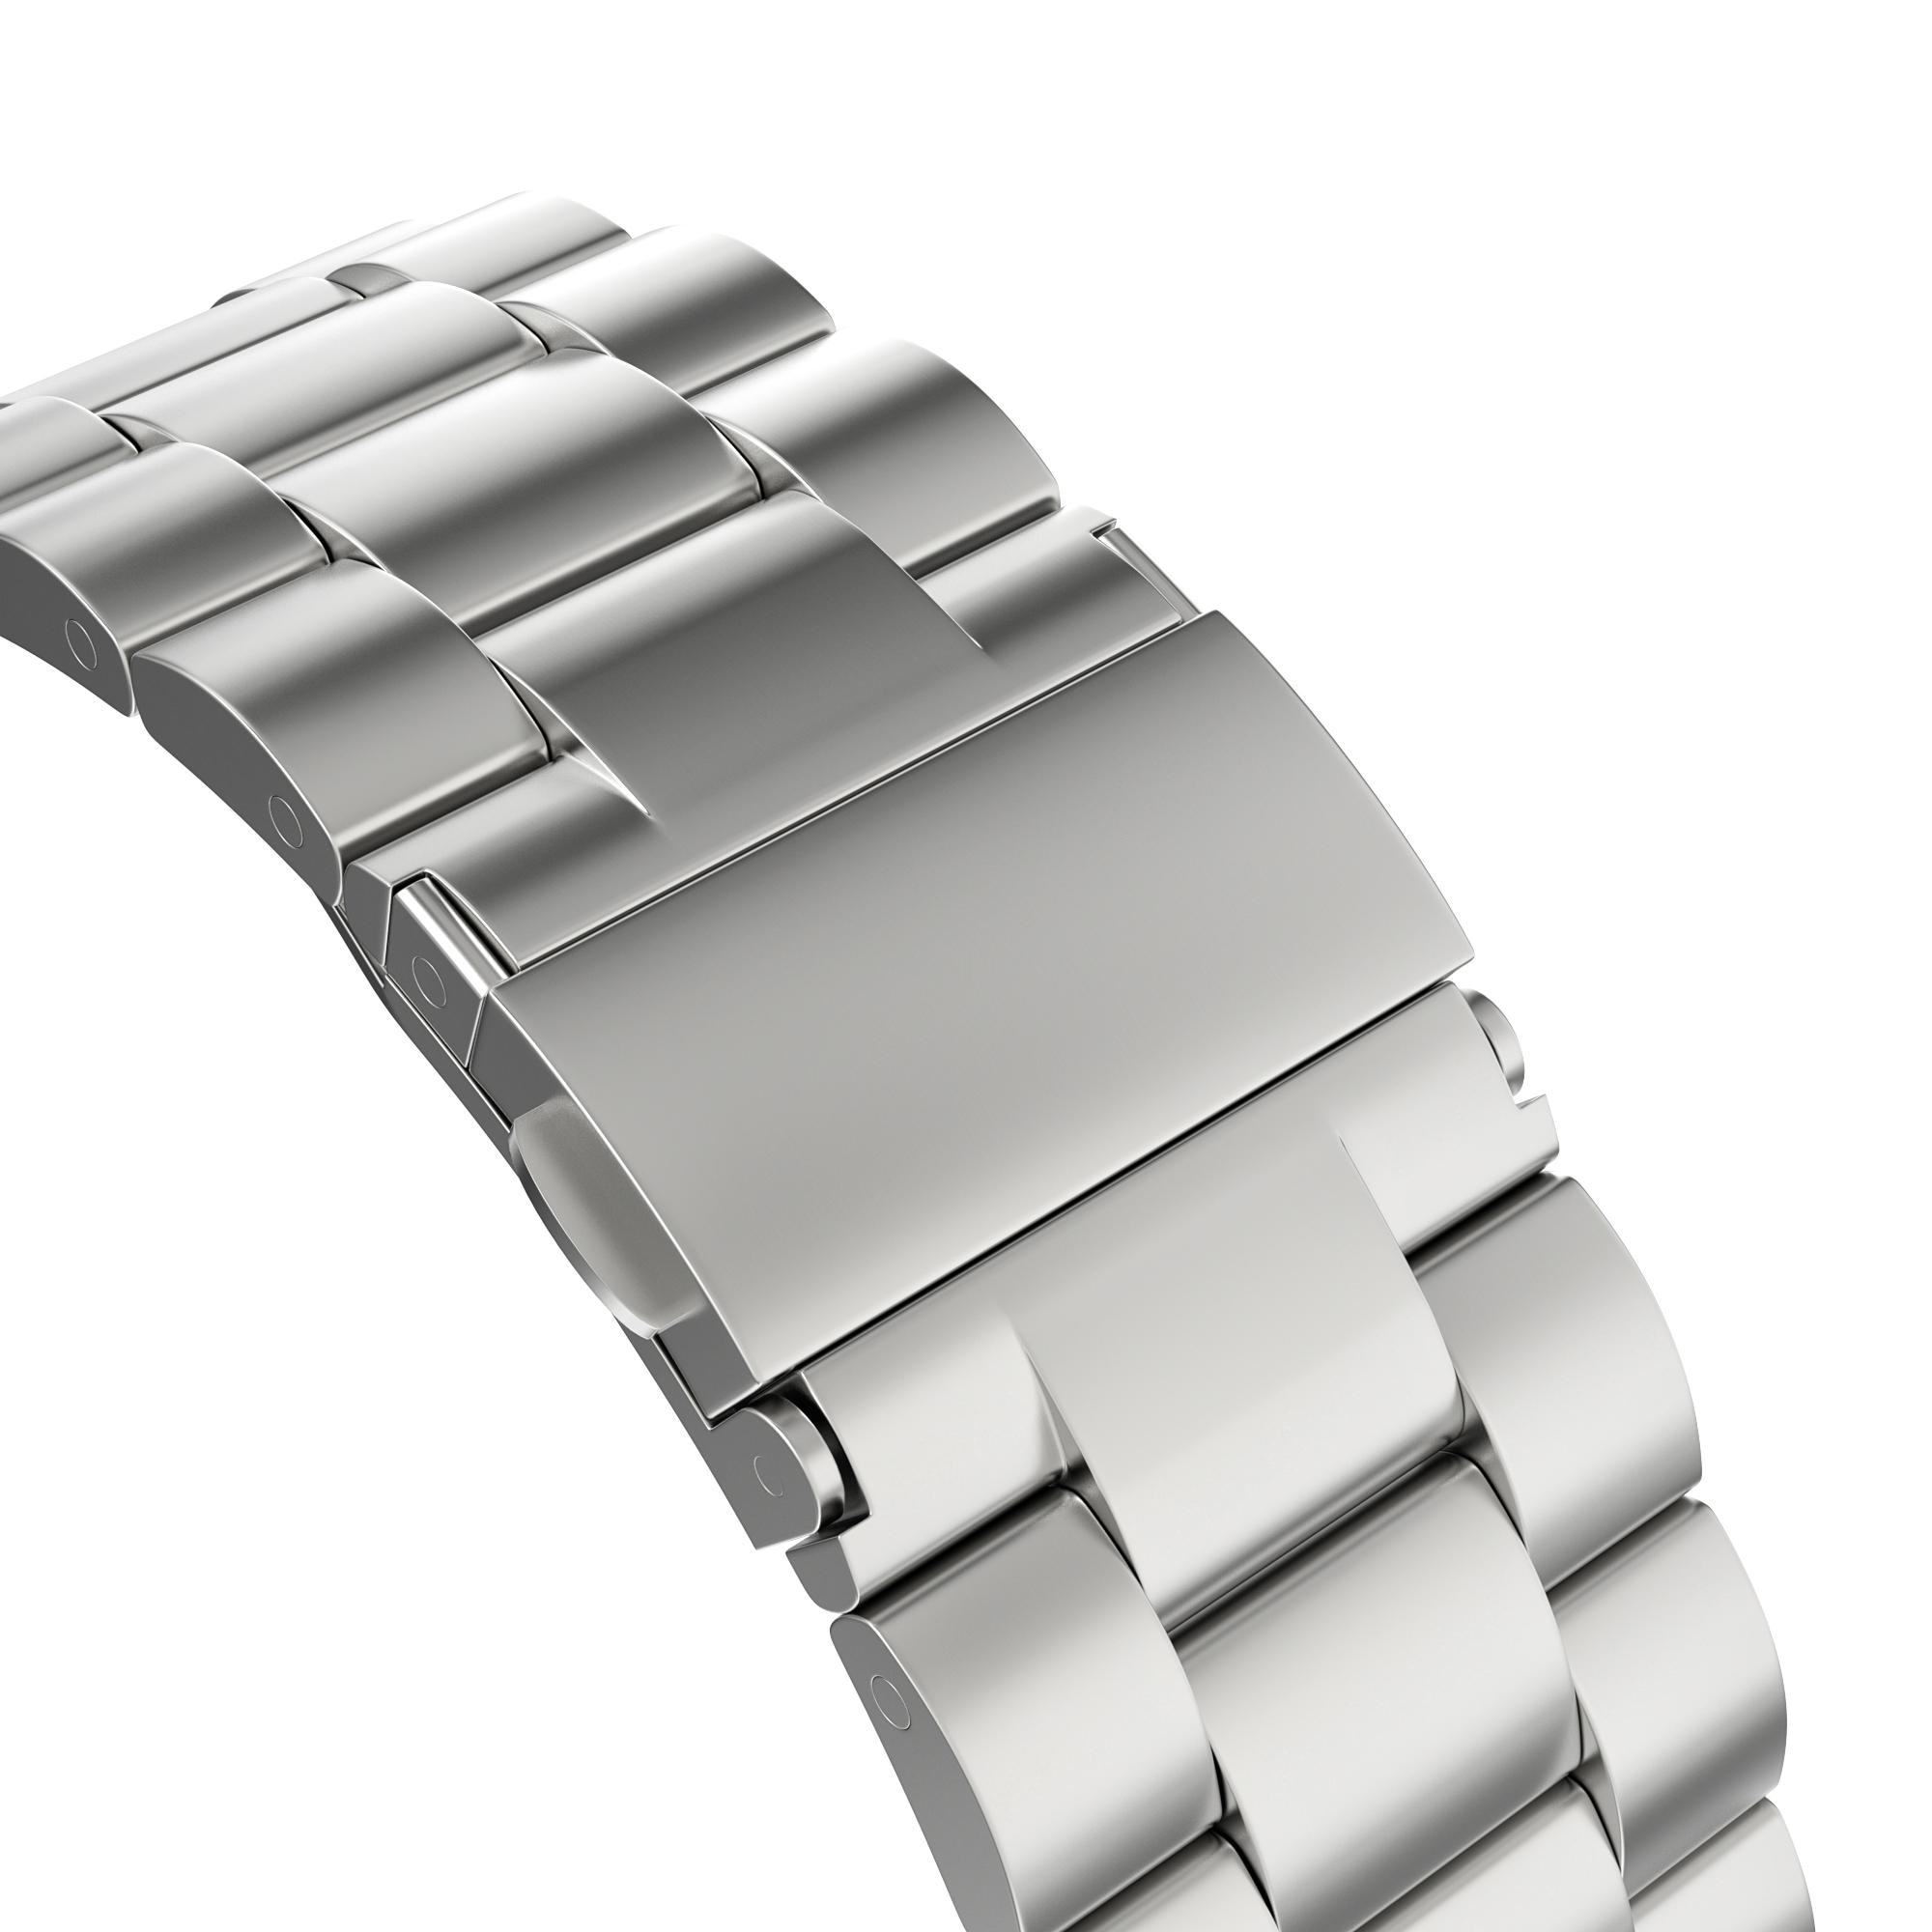 Apple Watch 41mm Series 7 Stilrent länkarmband i metall, silver